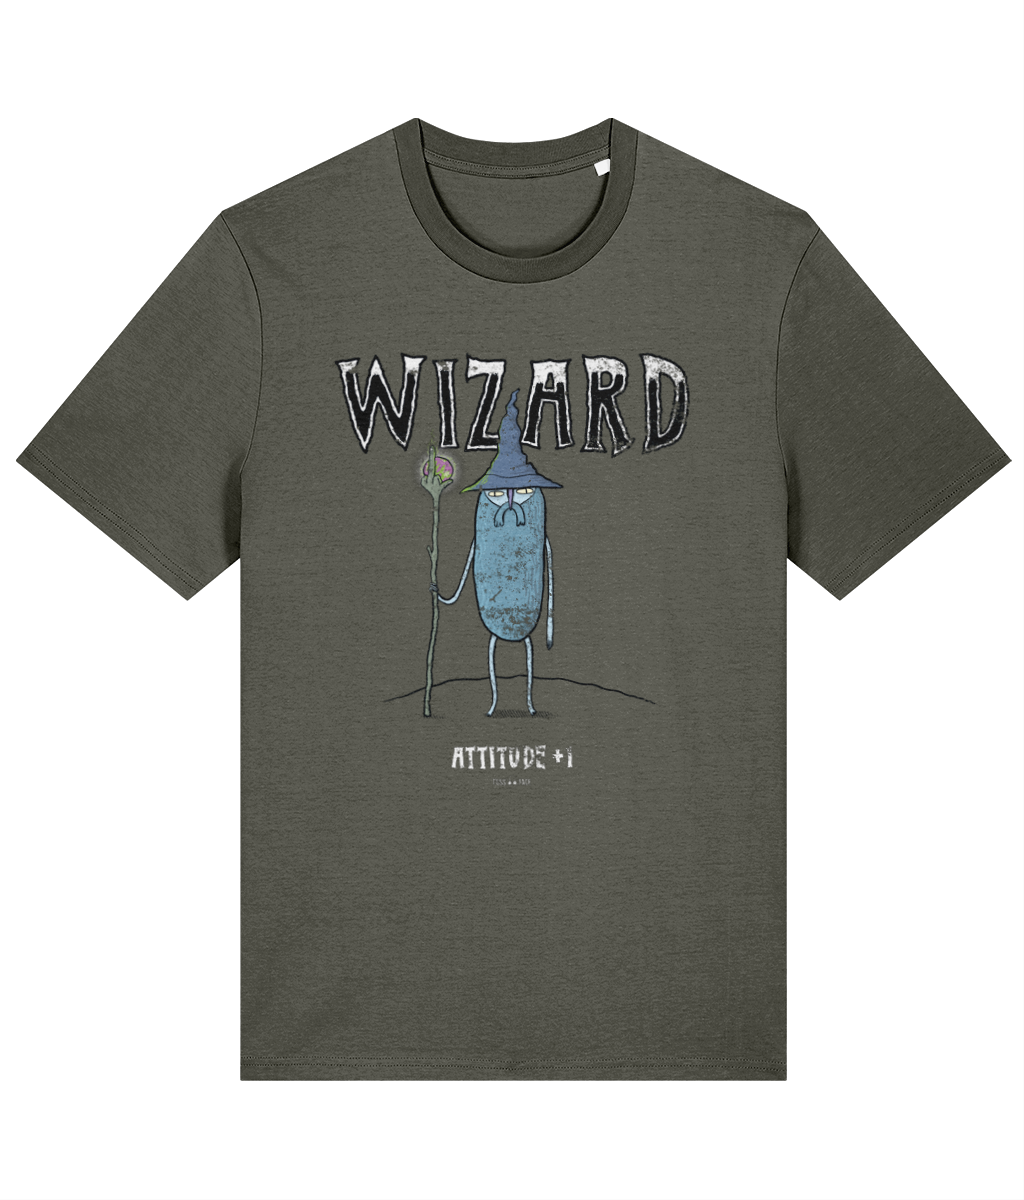 Wizard Attitude +1 - Tussface T-shirt